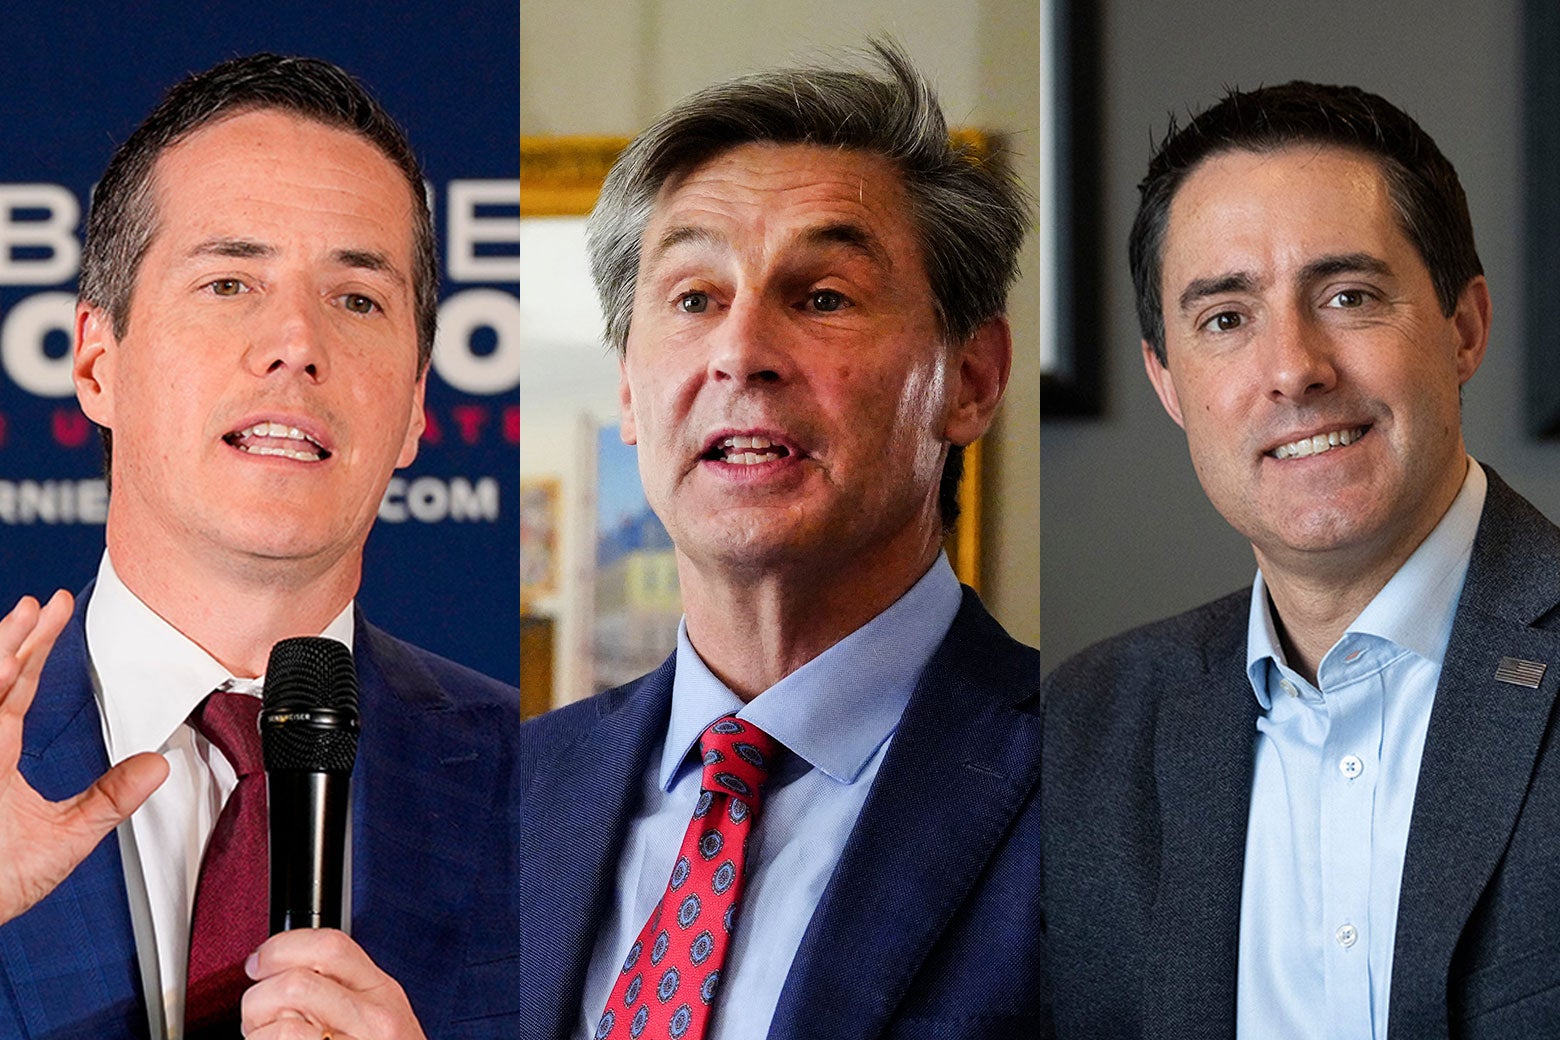 From left to right: Ohio Senate candidates Bernie Moreno, Matt Dolan, and Frank LaRose.